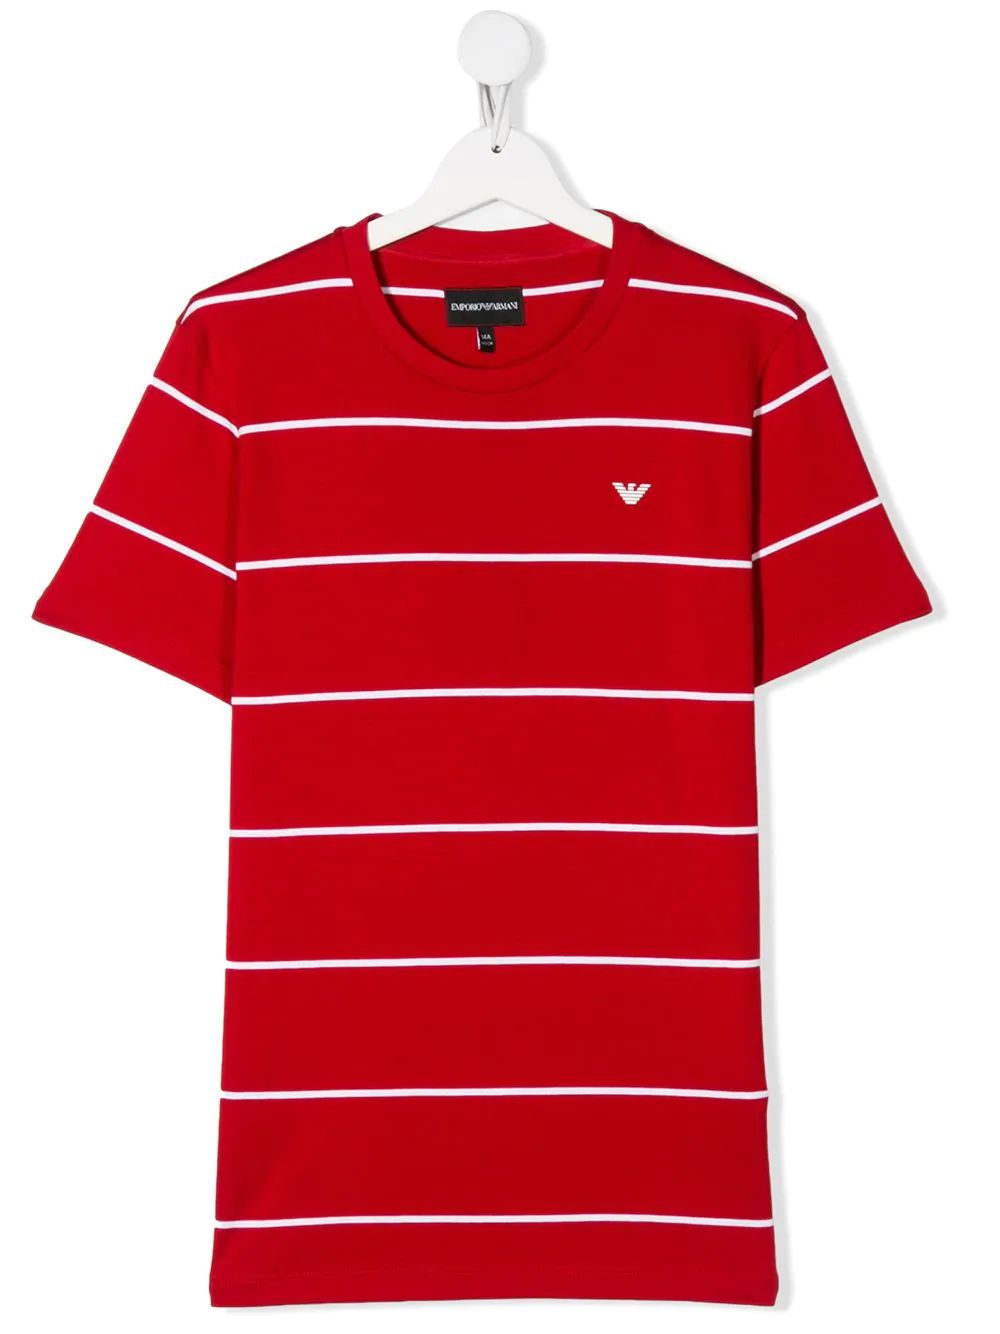 Boys Red Stripe Cotton T-Shirt